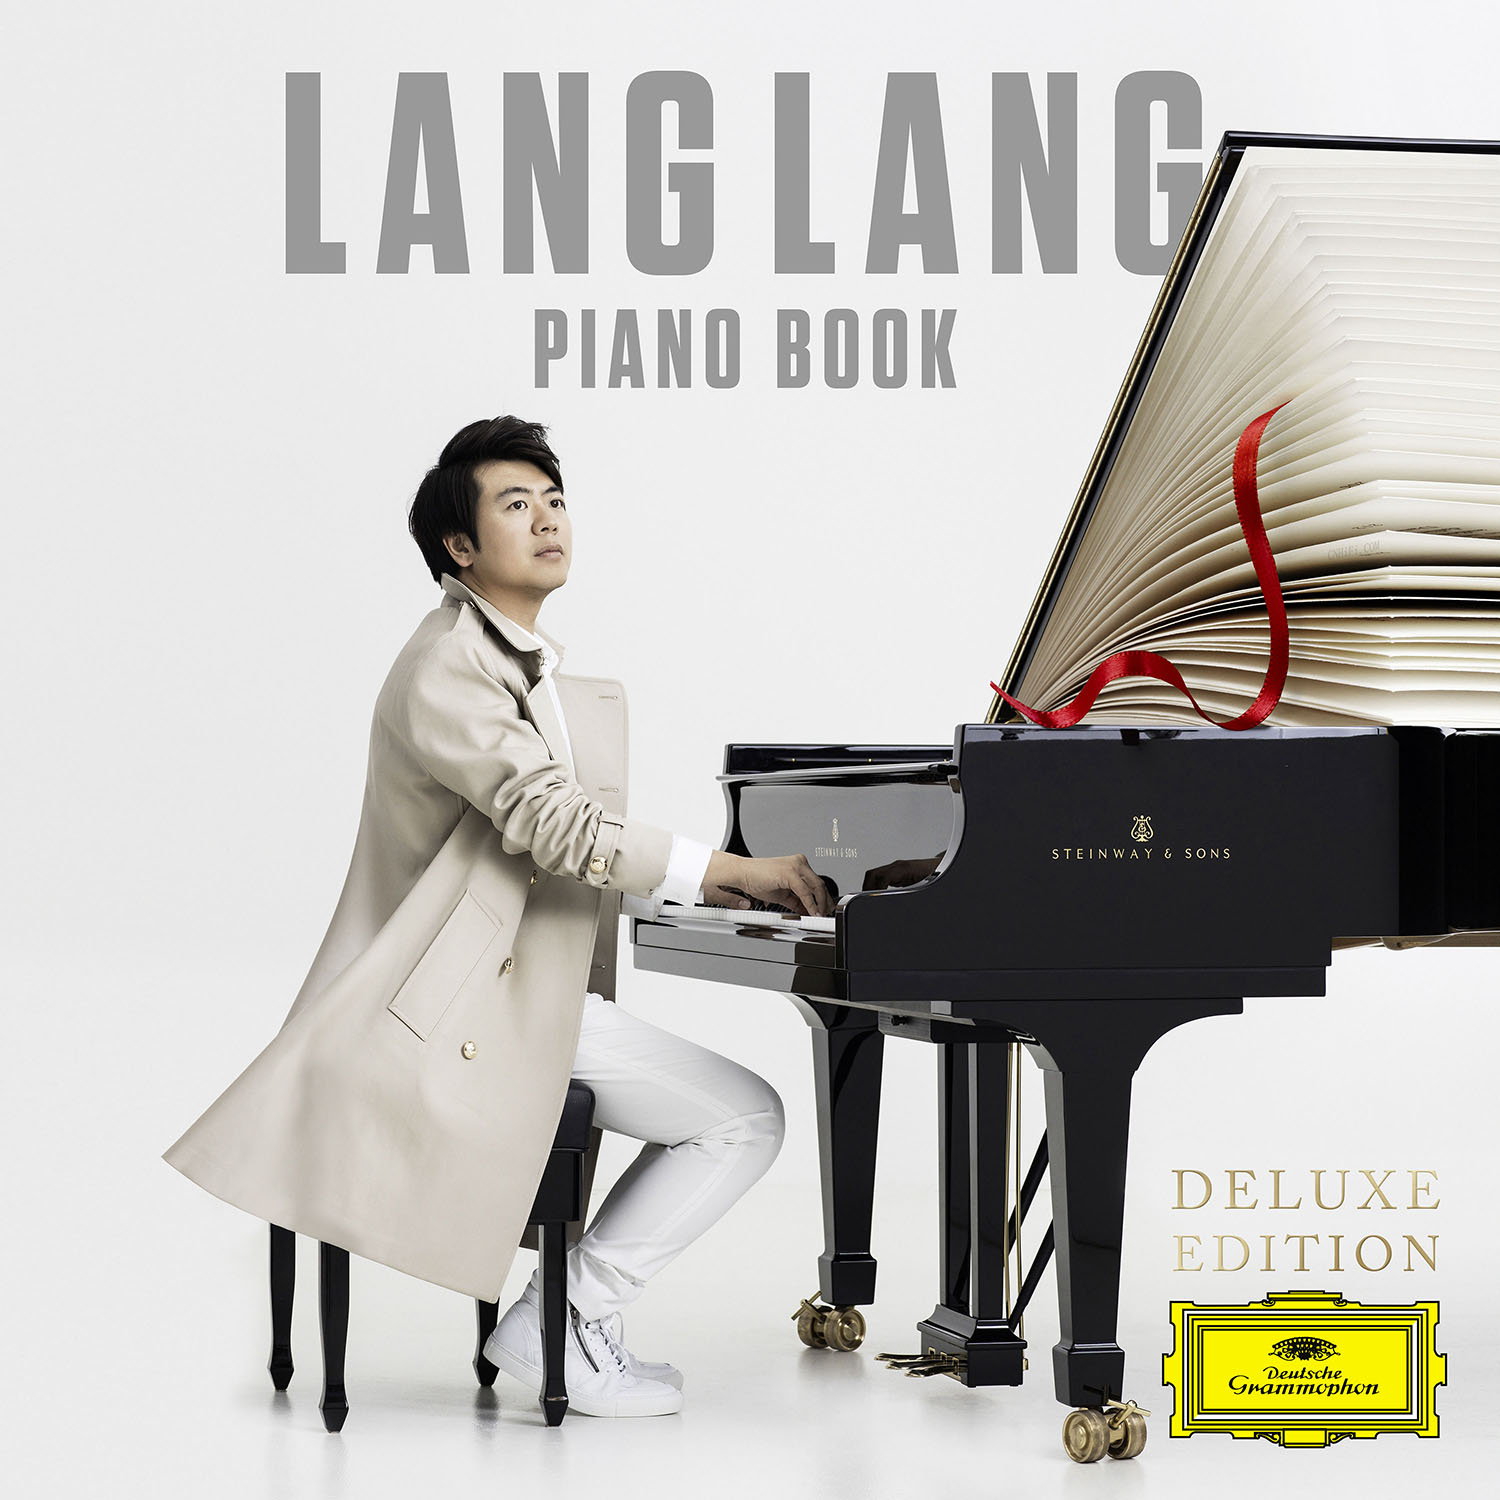 《Piano Book 钢琴书 [Deluxe Edition]》